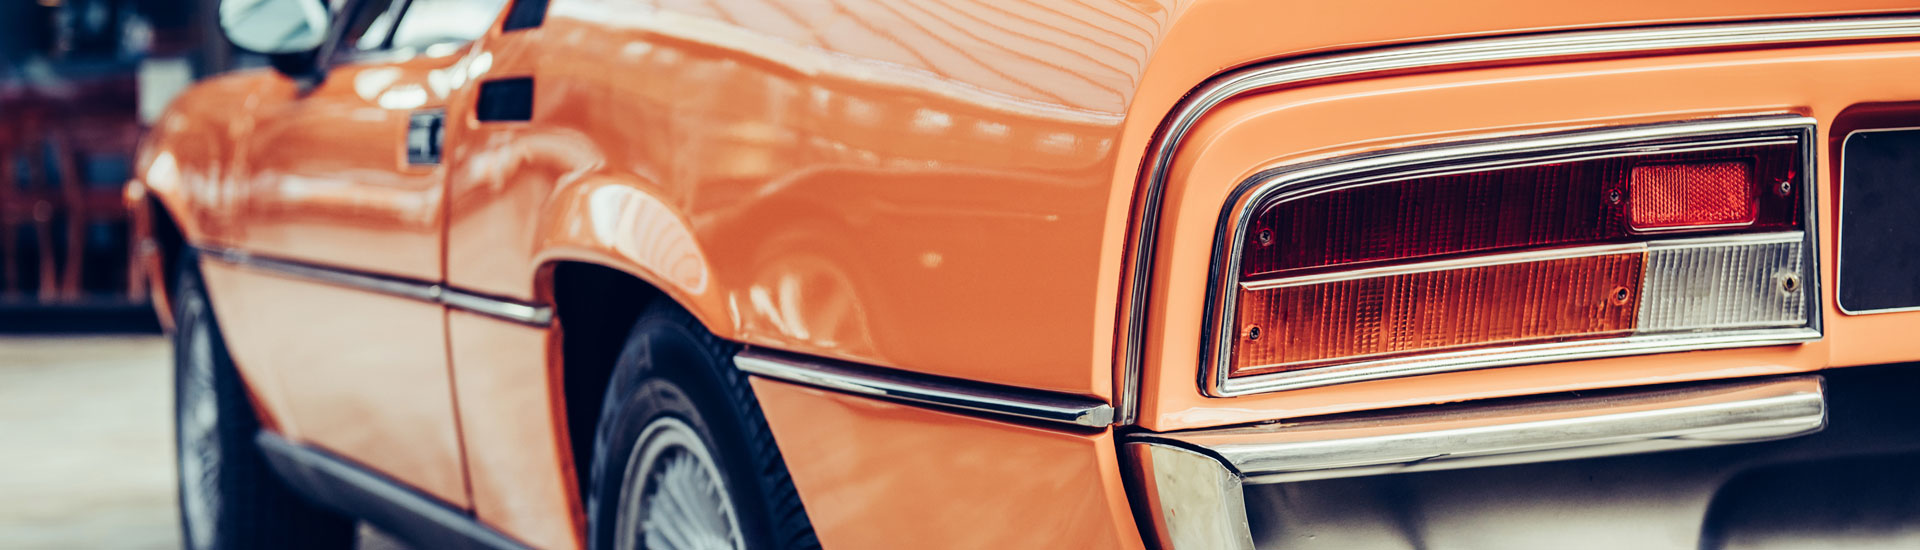 Rear Side View of a Orange Car